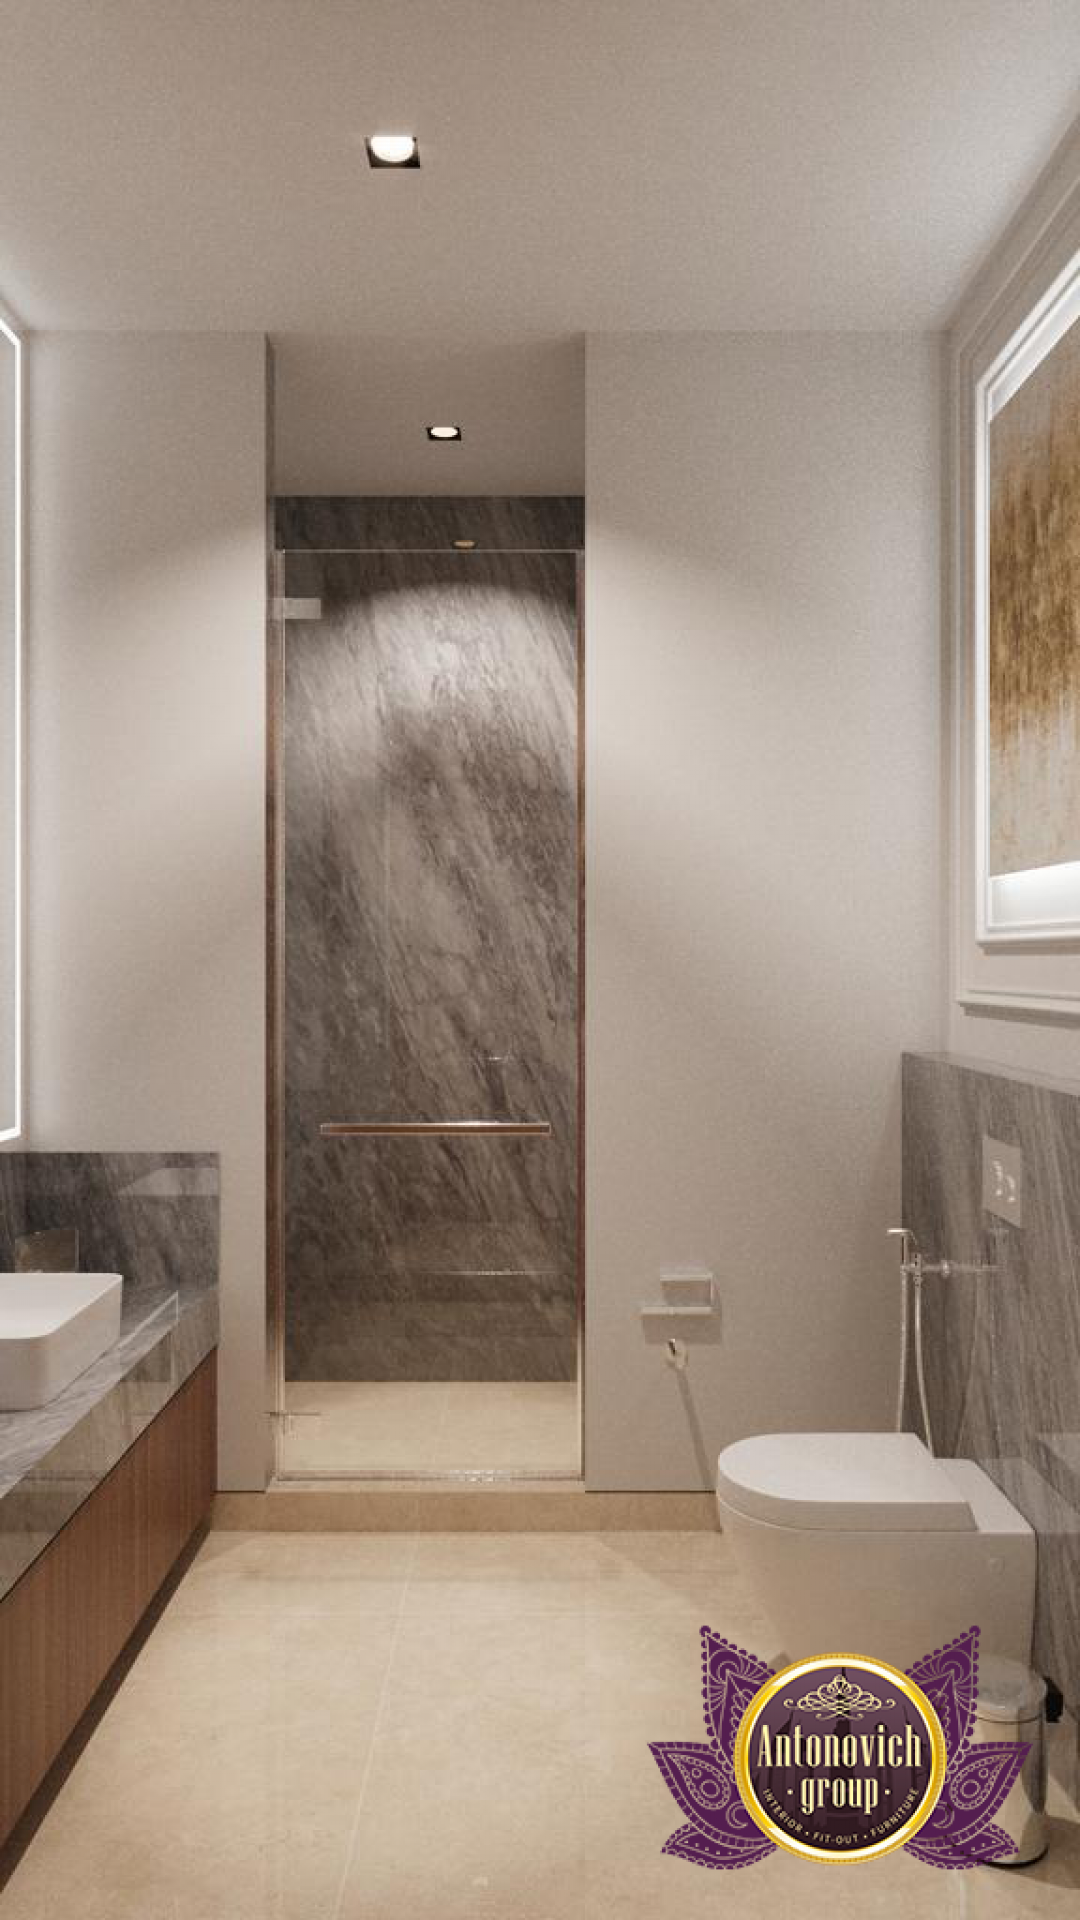 Bathroom Decor Ideas to Achieve a Spa-Like Sanctuary - Architexture  Furniture and Interior Design